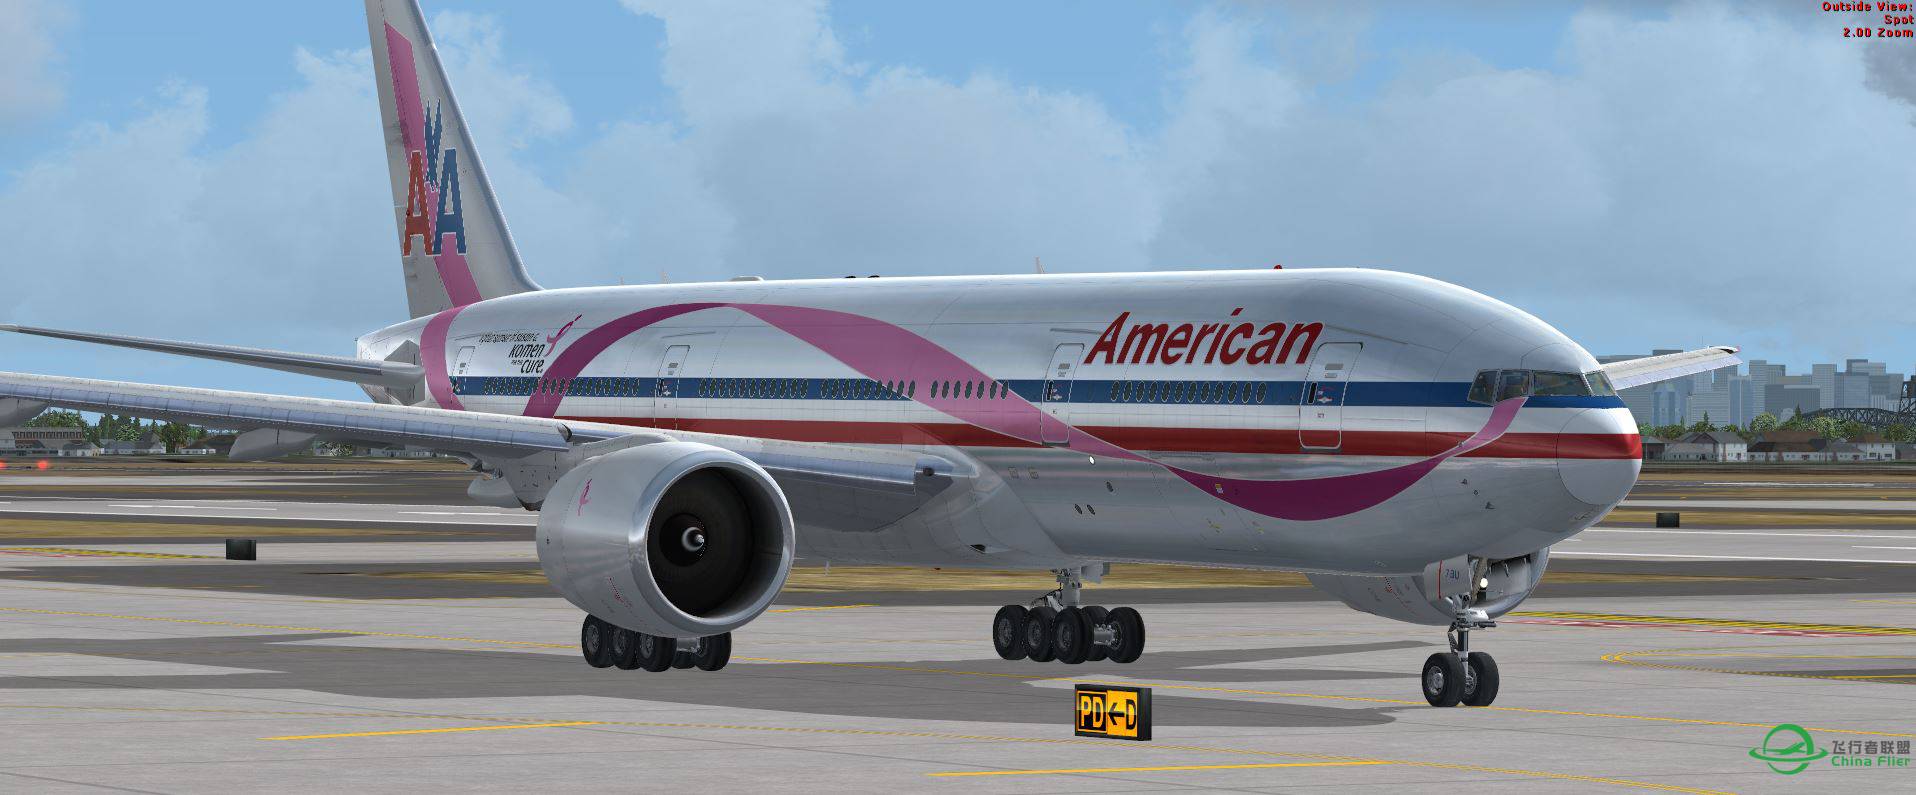 B777 American Airline-5686 